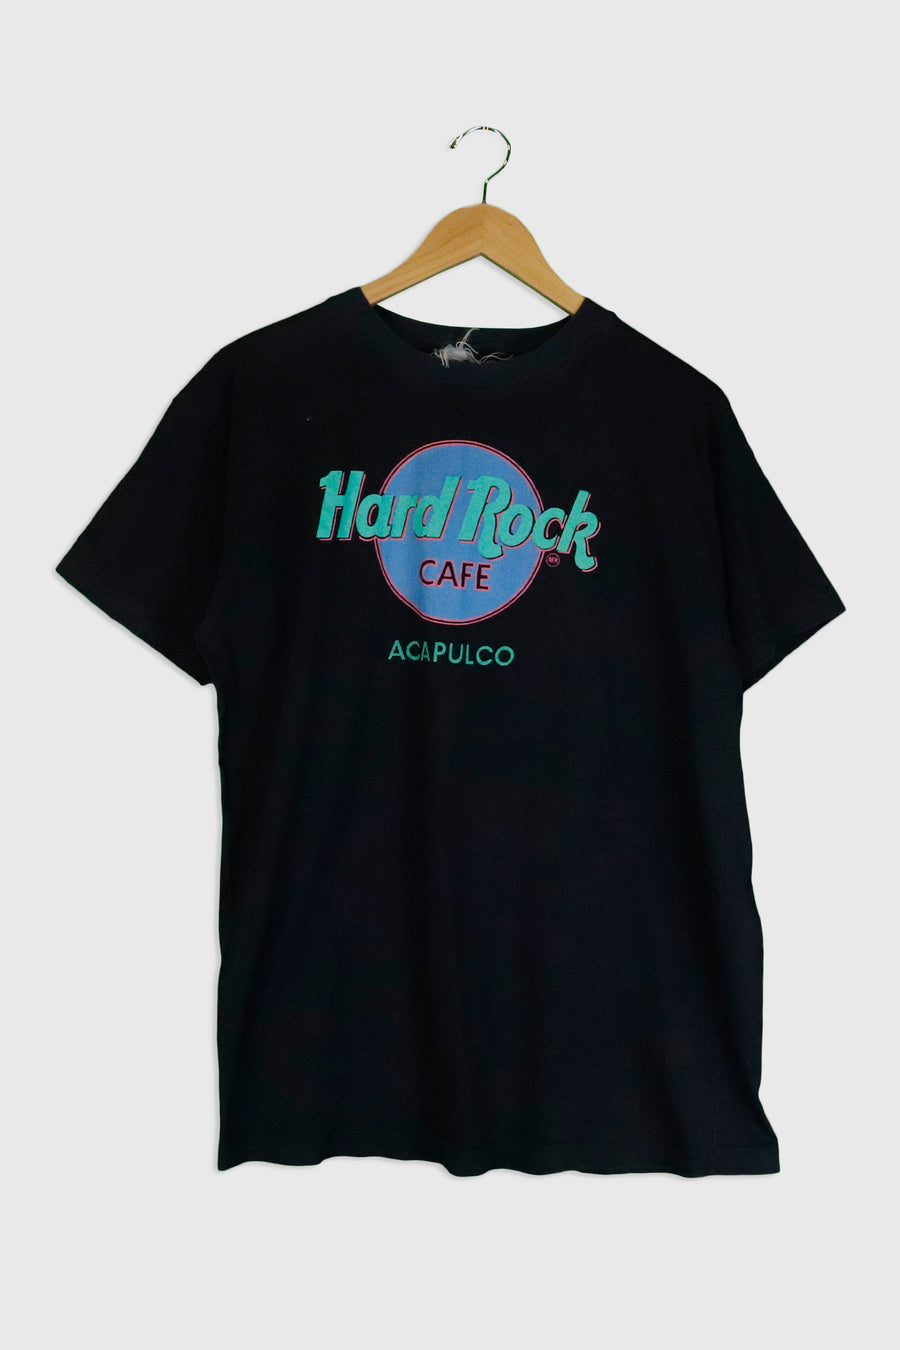 Vintage Hard Rock Cafe Acapulco Vinyl T Shirt Sz L